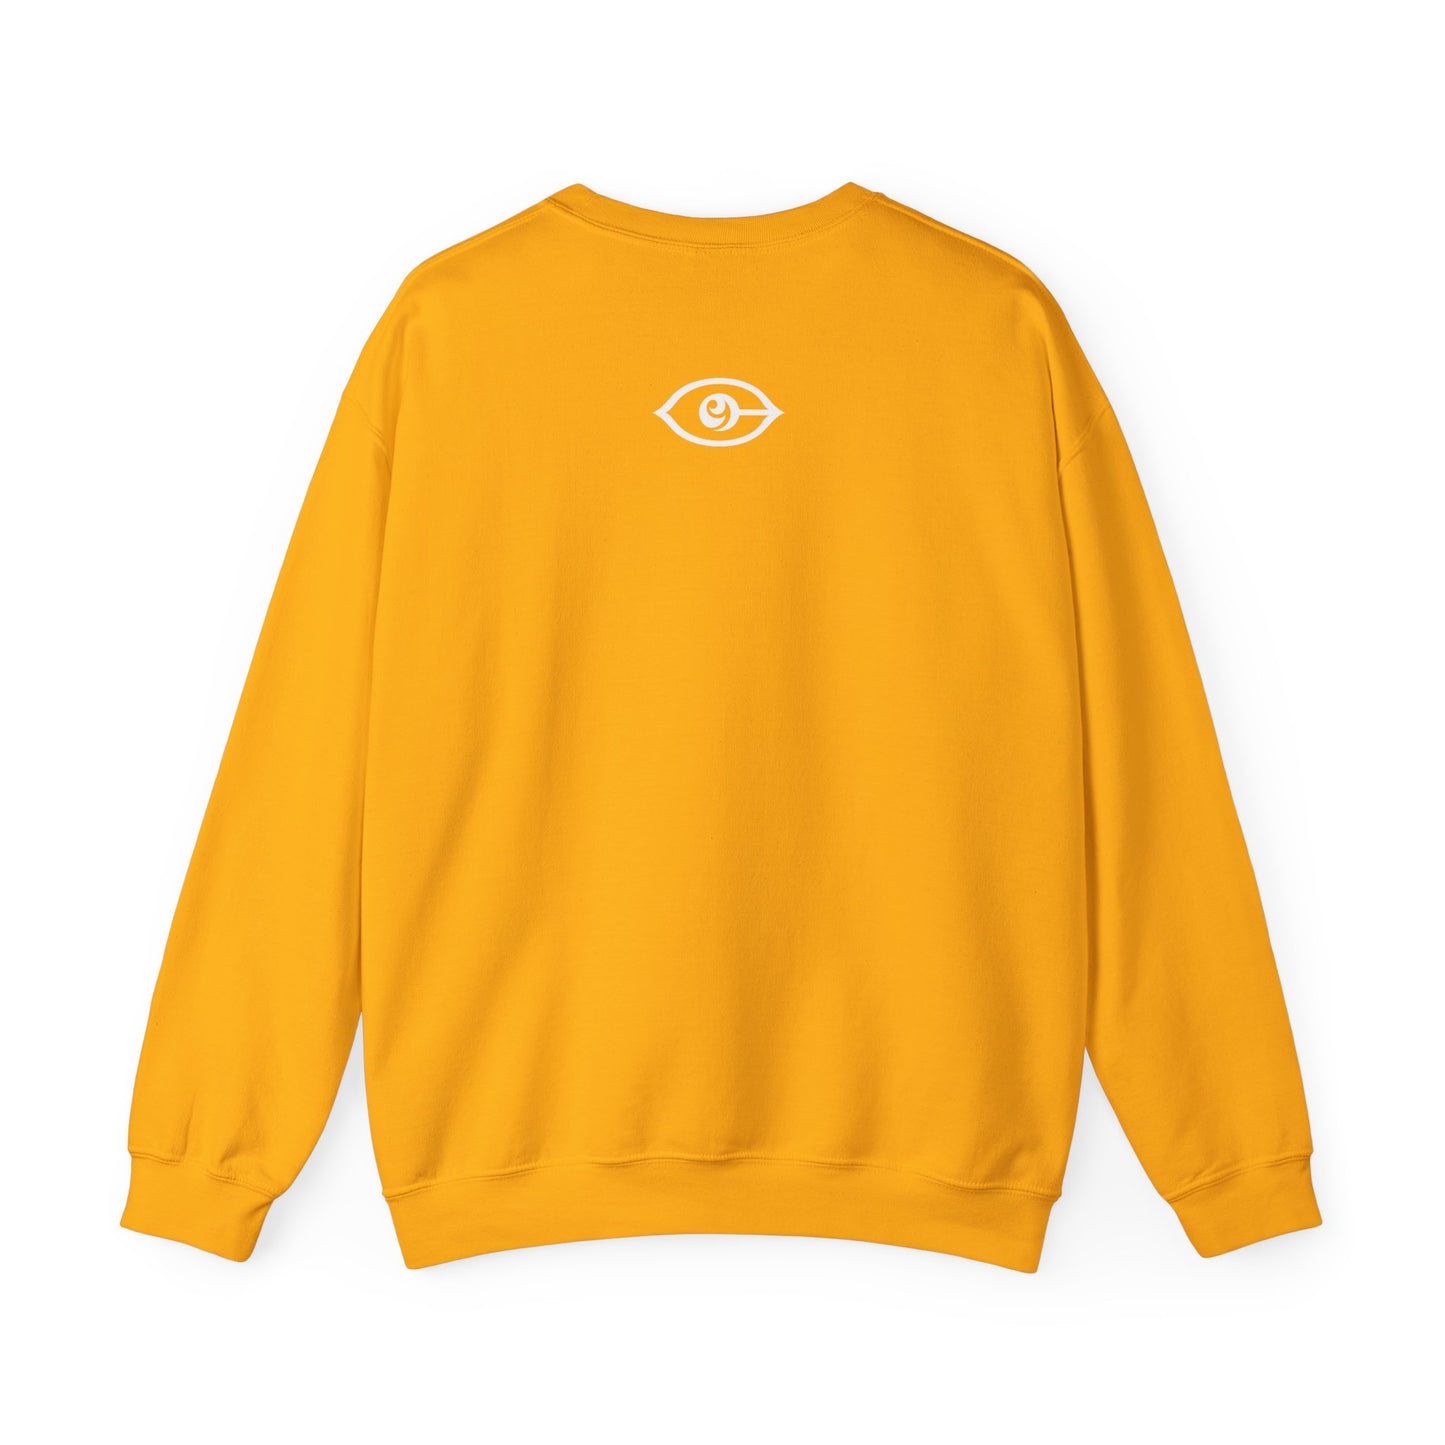 Oregon  -VS - Everybody Unisex Heavy Blend™ Crewneck Sweatshirt